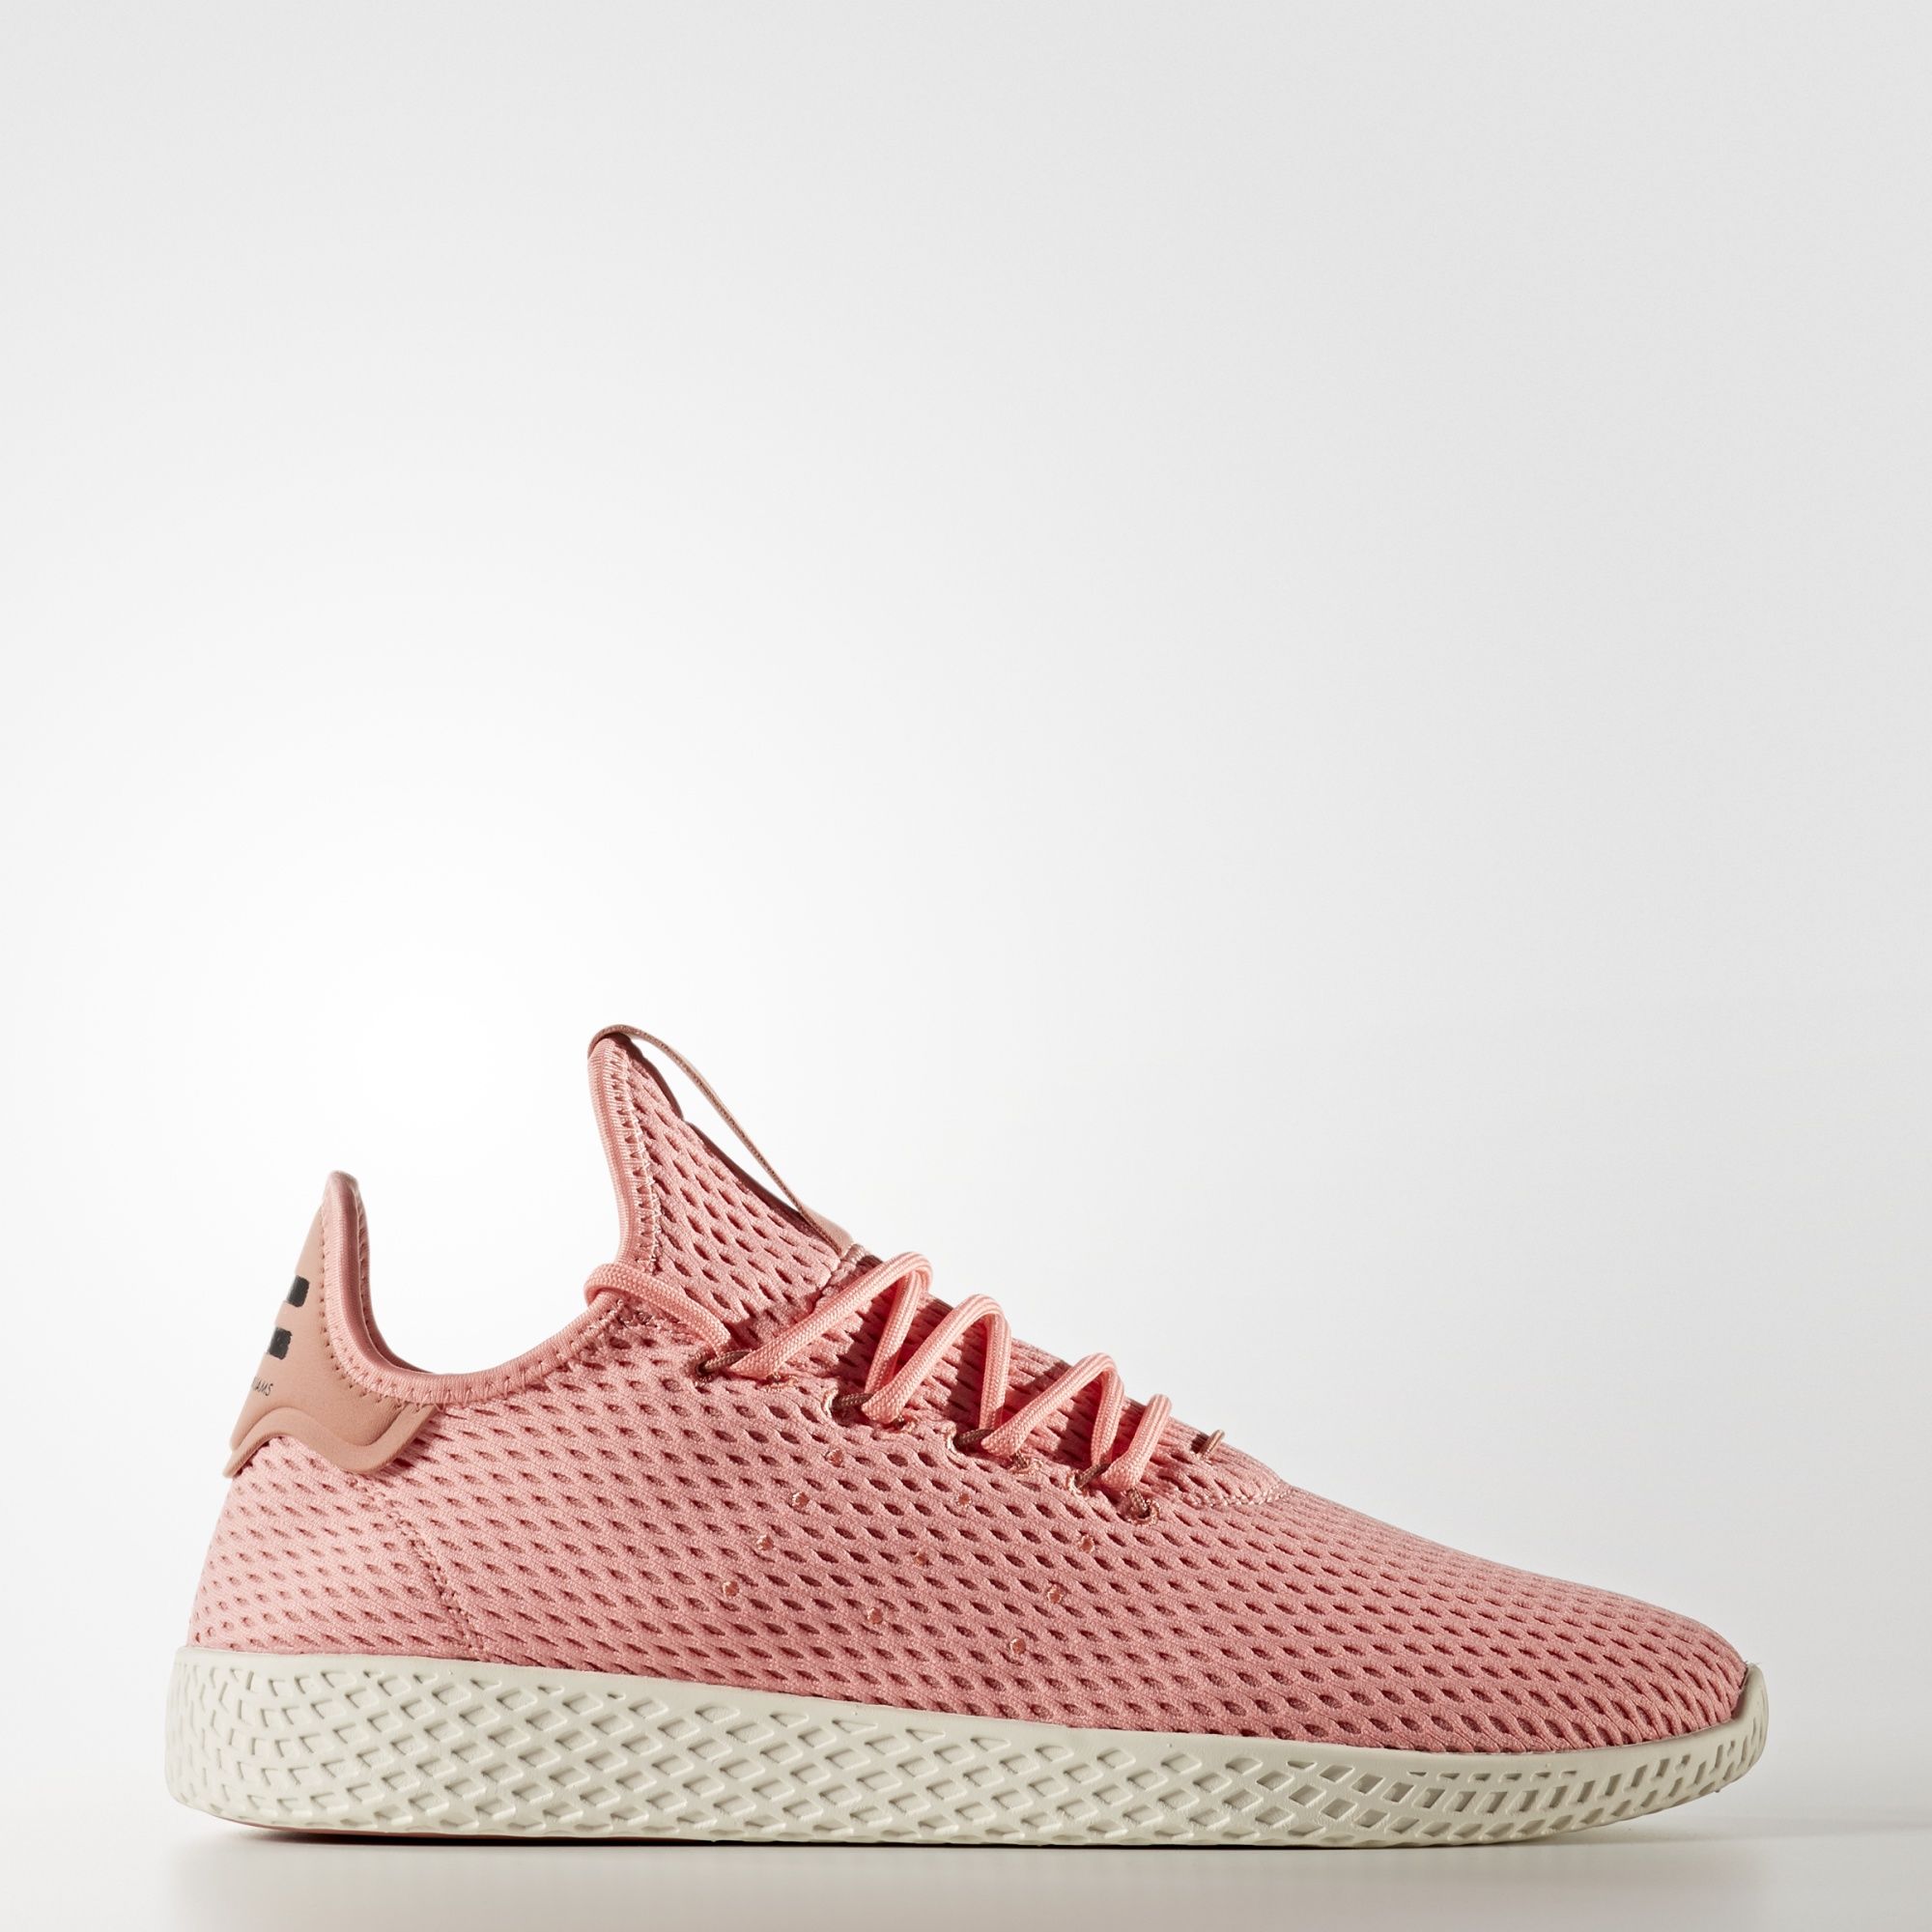 adidas-pharrell-williams-tennis-hu-tactile-rose-raw-pink-2